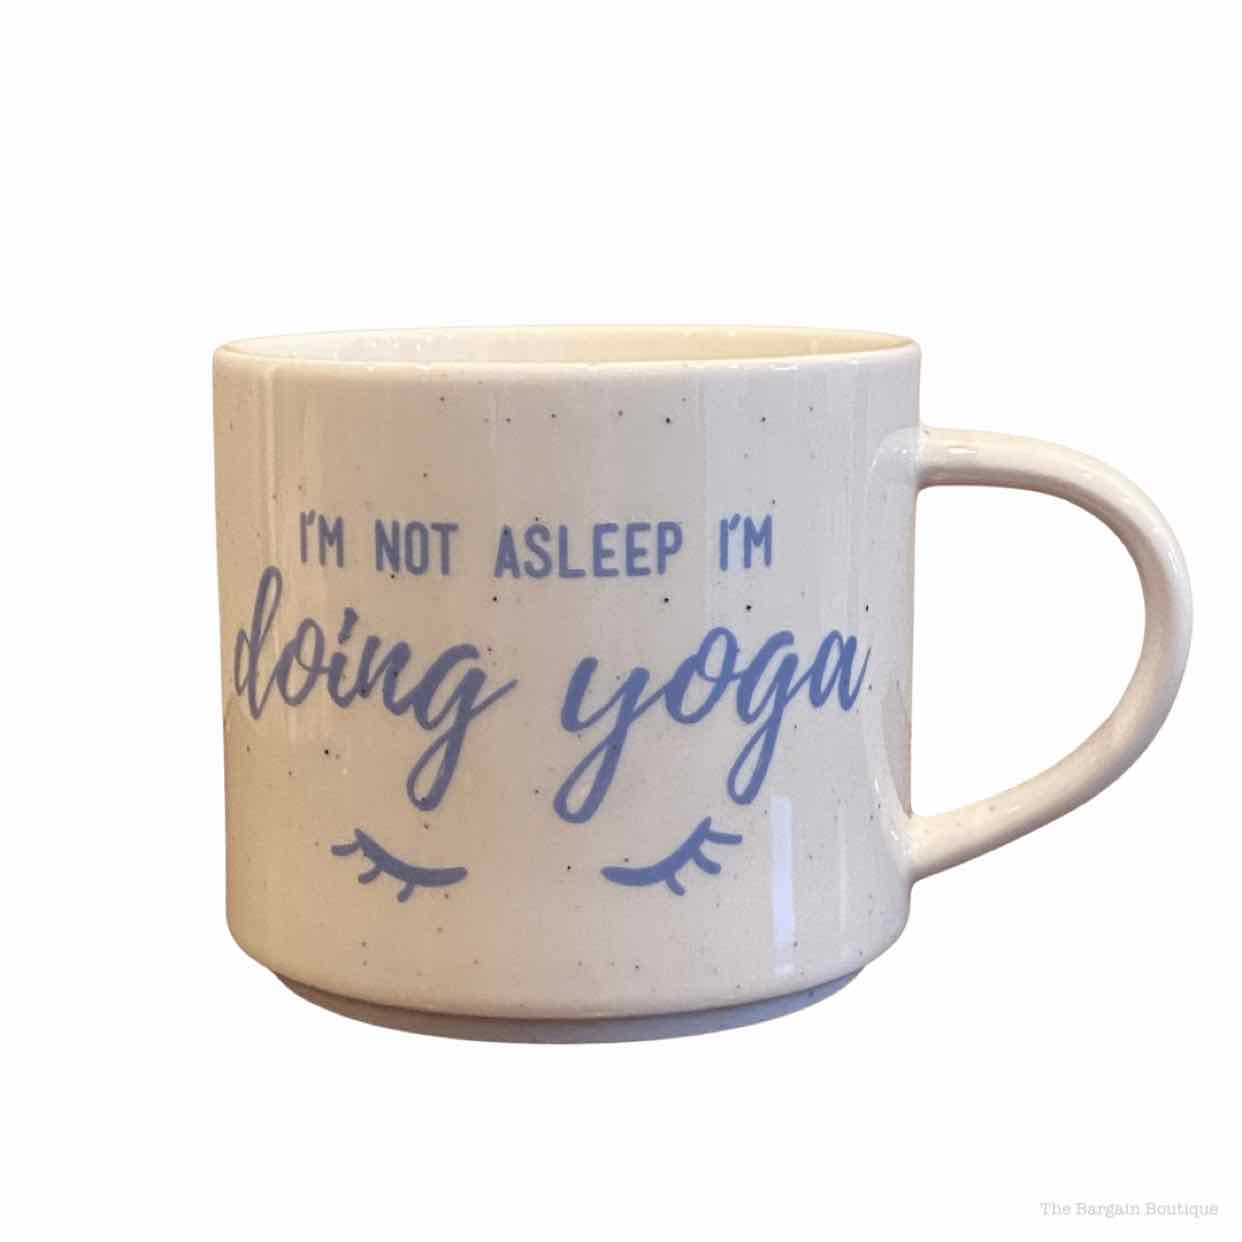 I'm Not Asleep I'm Doing Yoga Mug